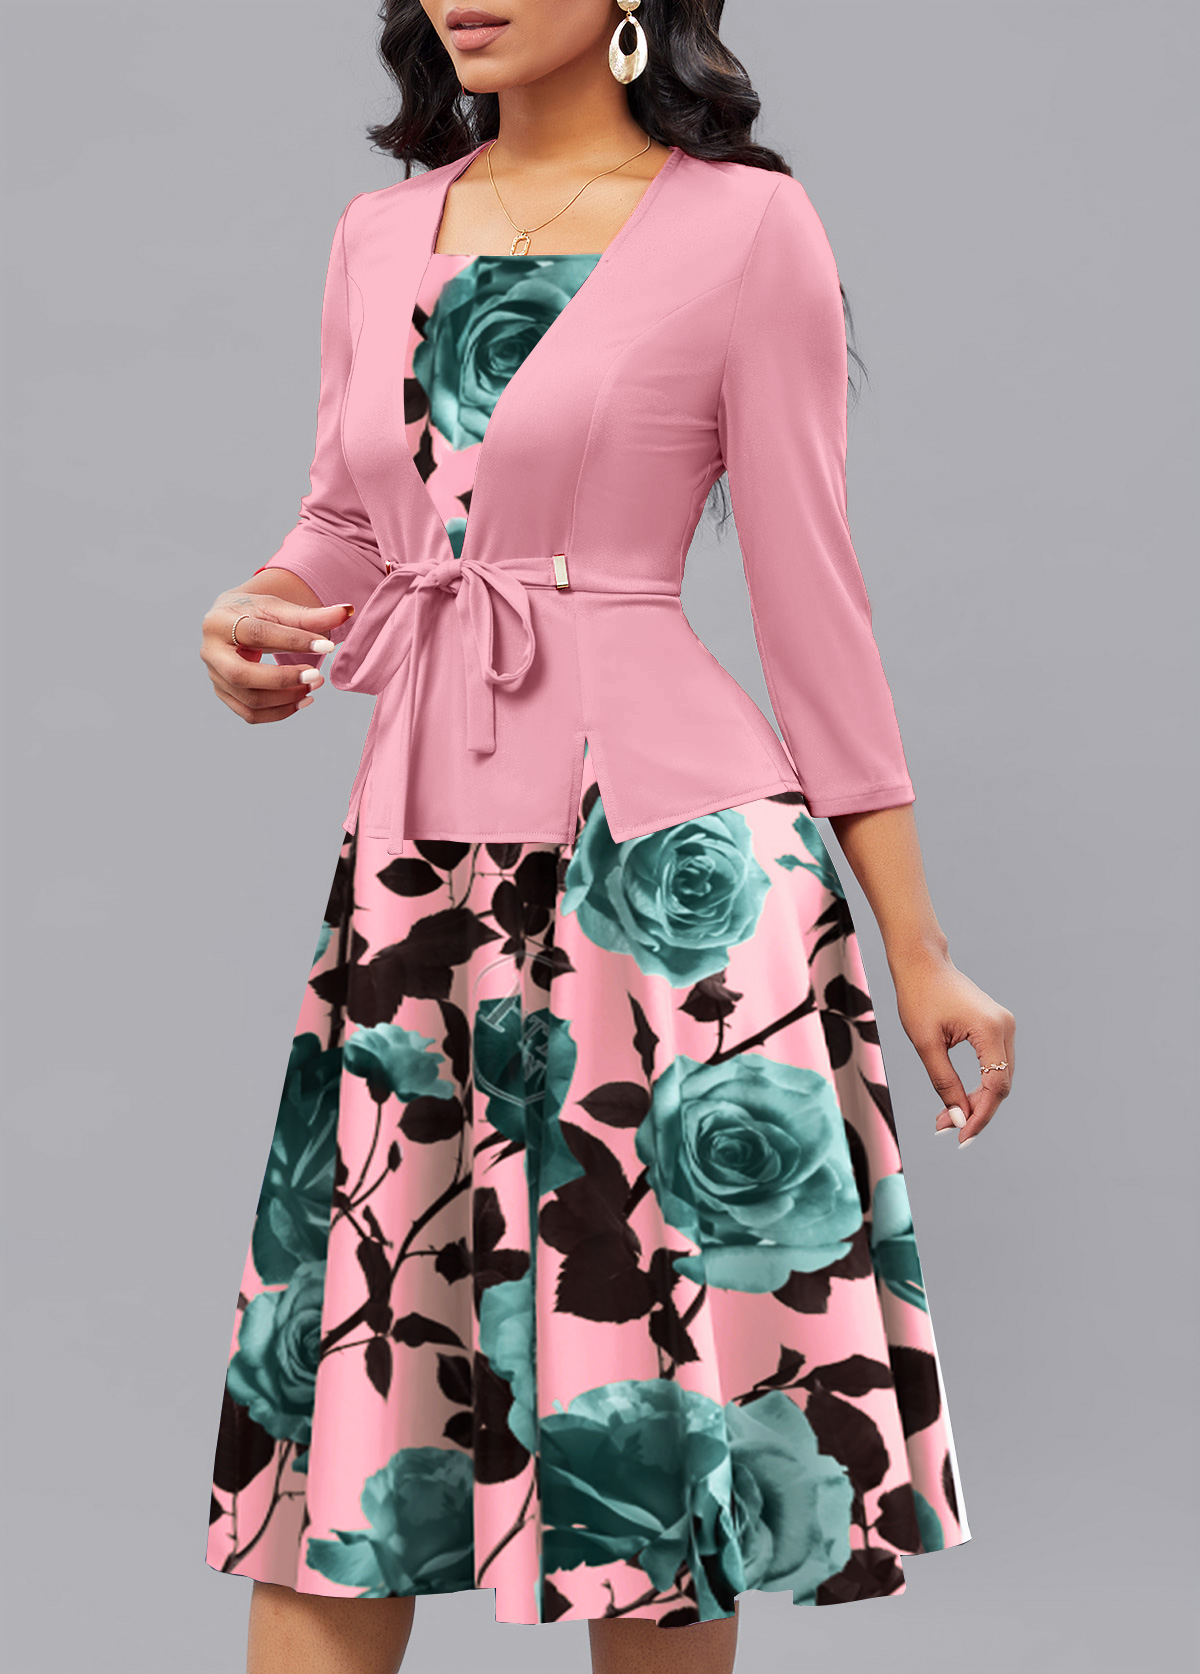 Floral Print Patchwork Pink 3/4 Sleeve Square Neck Dress